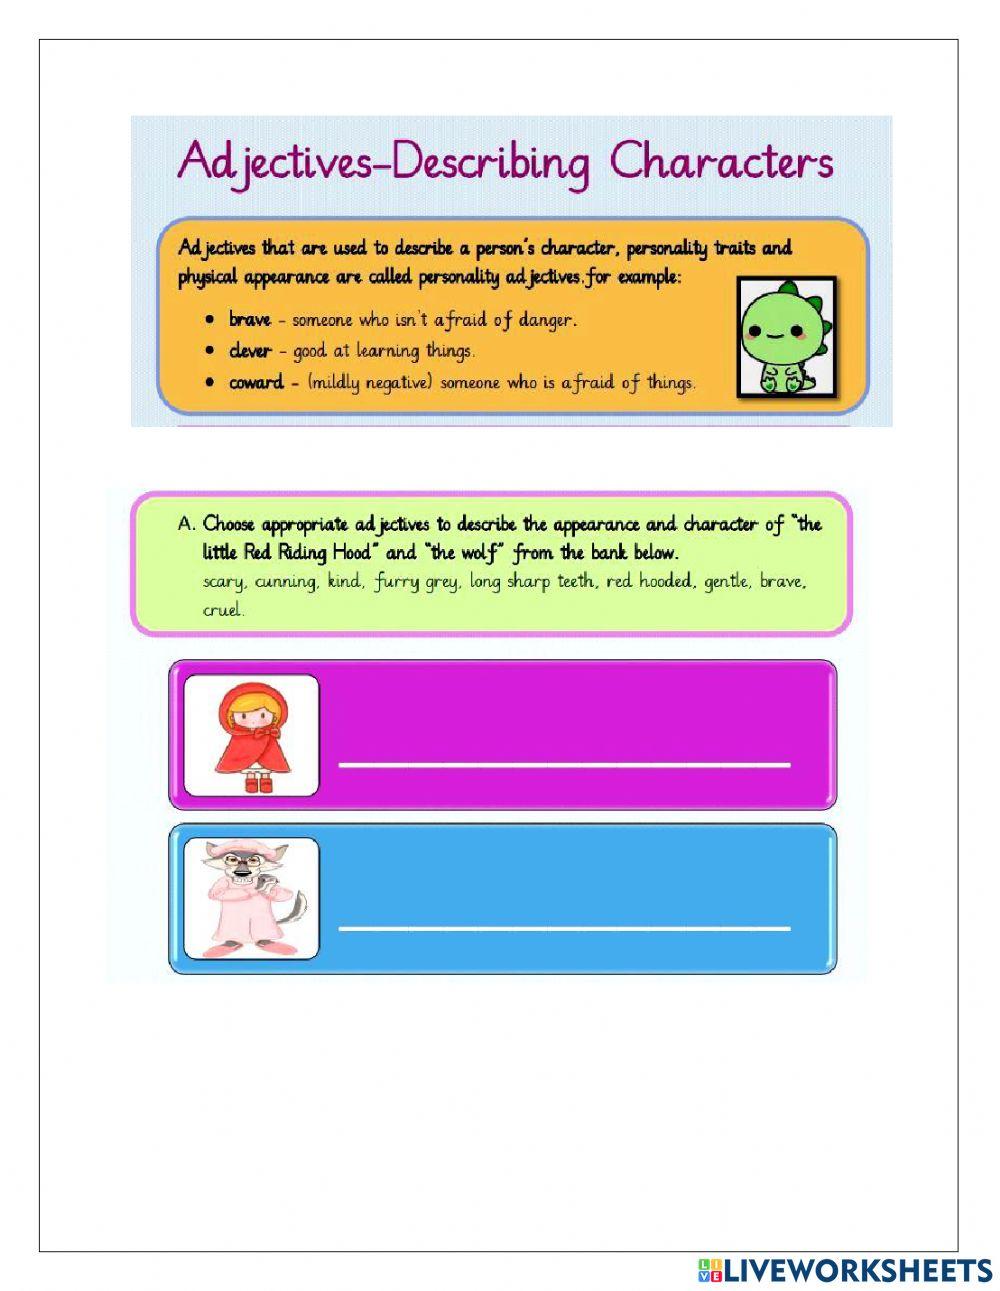 Describing Characters p-adjectives